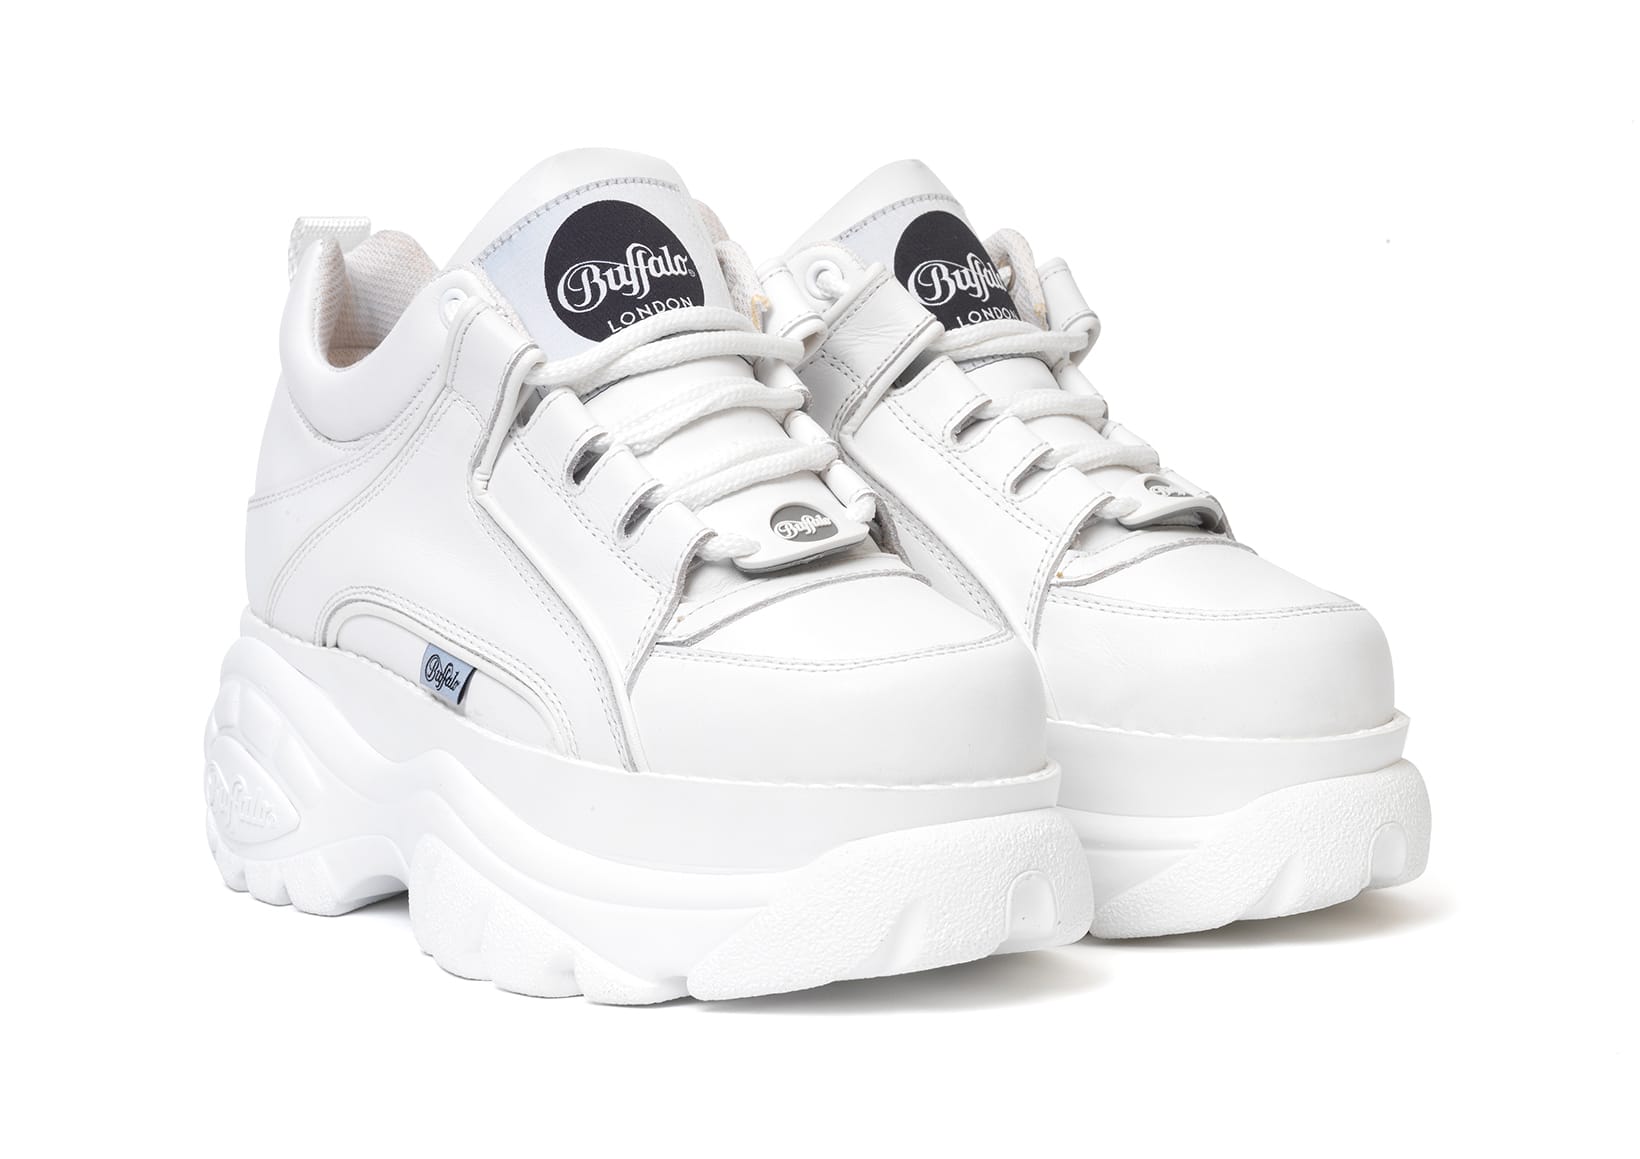 white platform sneakers 90s